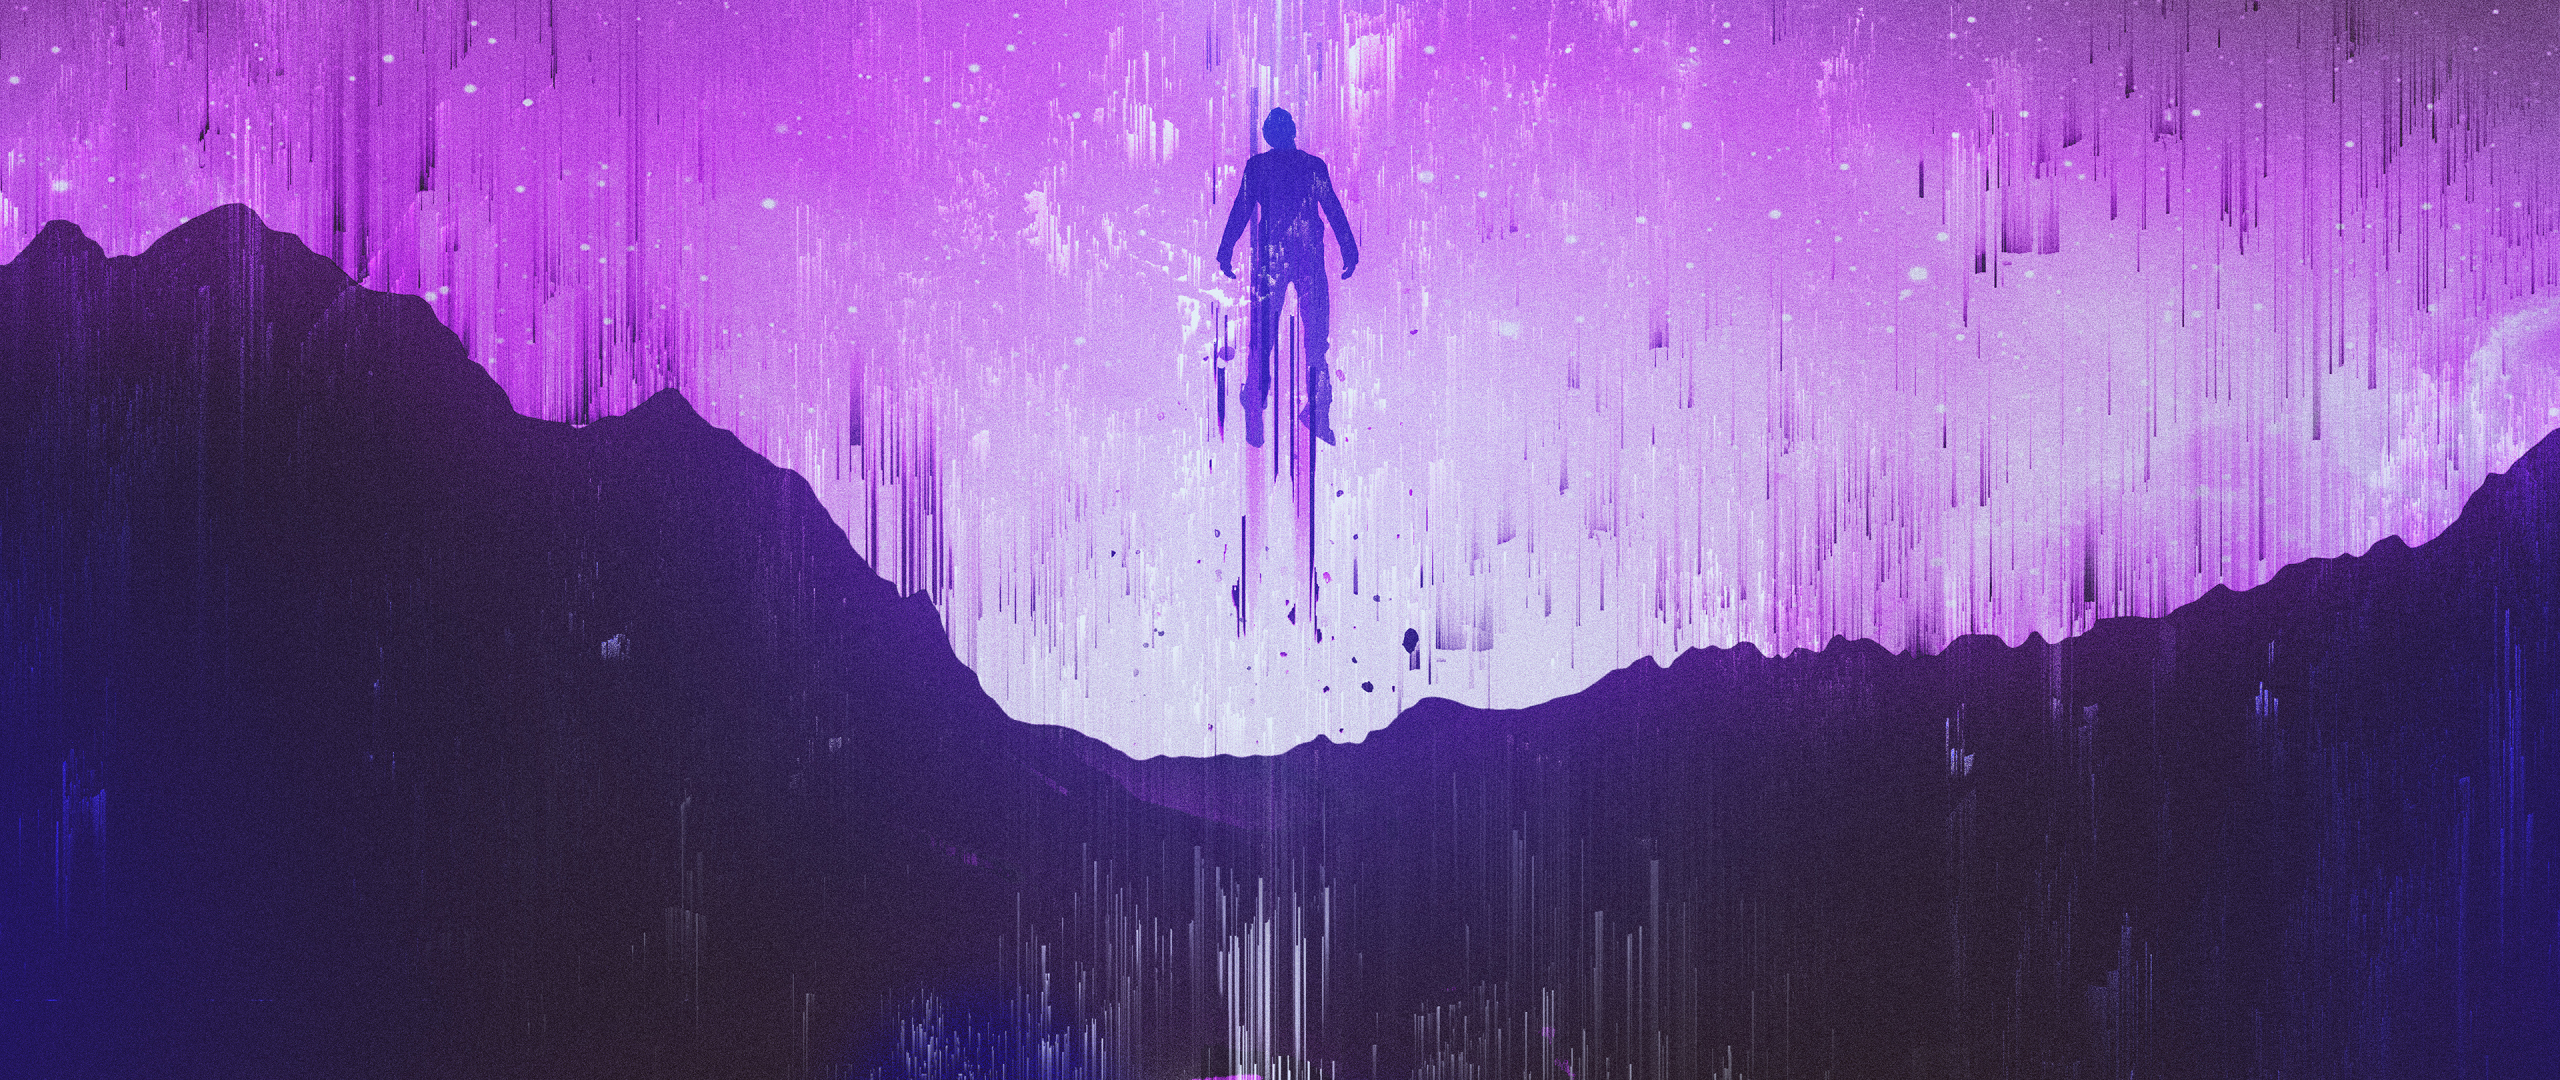 Download wallpaper 2560x1080 purple sky, man, dream, glitch art, dual wide  2560x1080 hd background, 7914